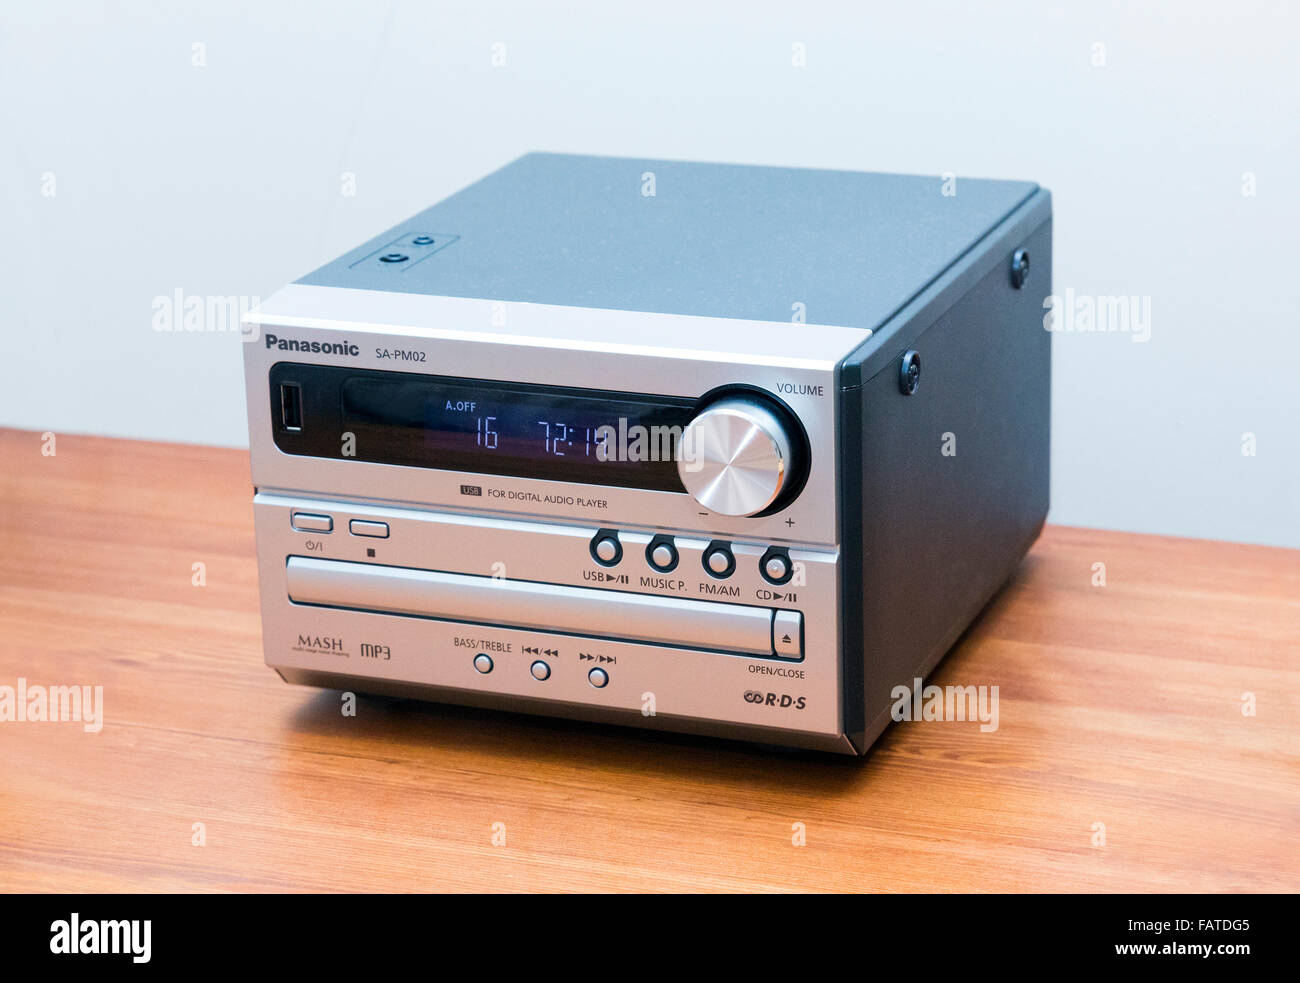 micro hifi unit with cd player and radio tuner made by Panasonic Stock  Photo - Alamy